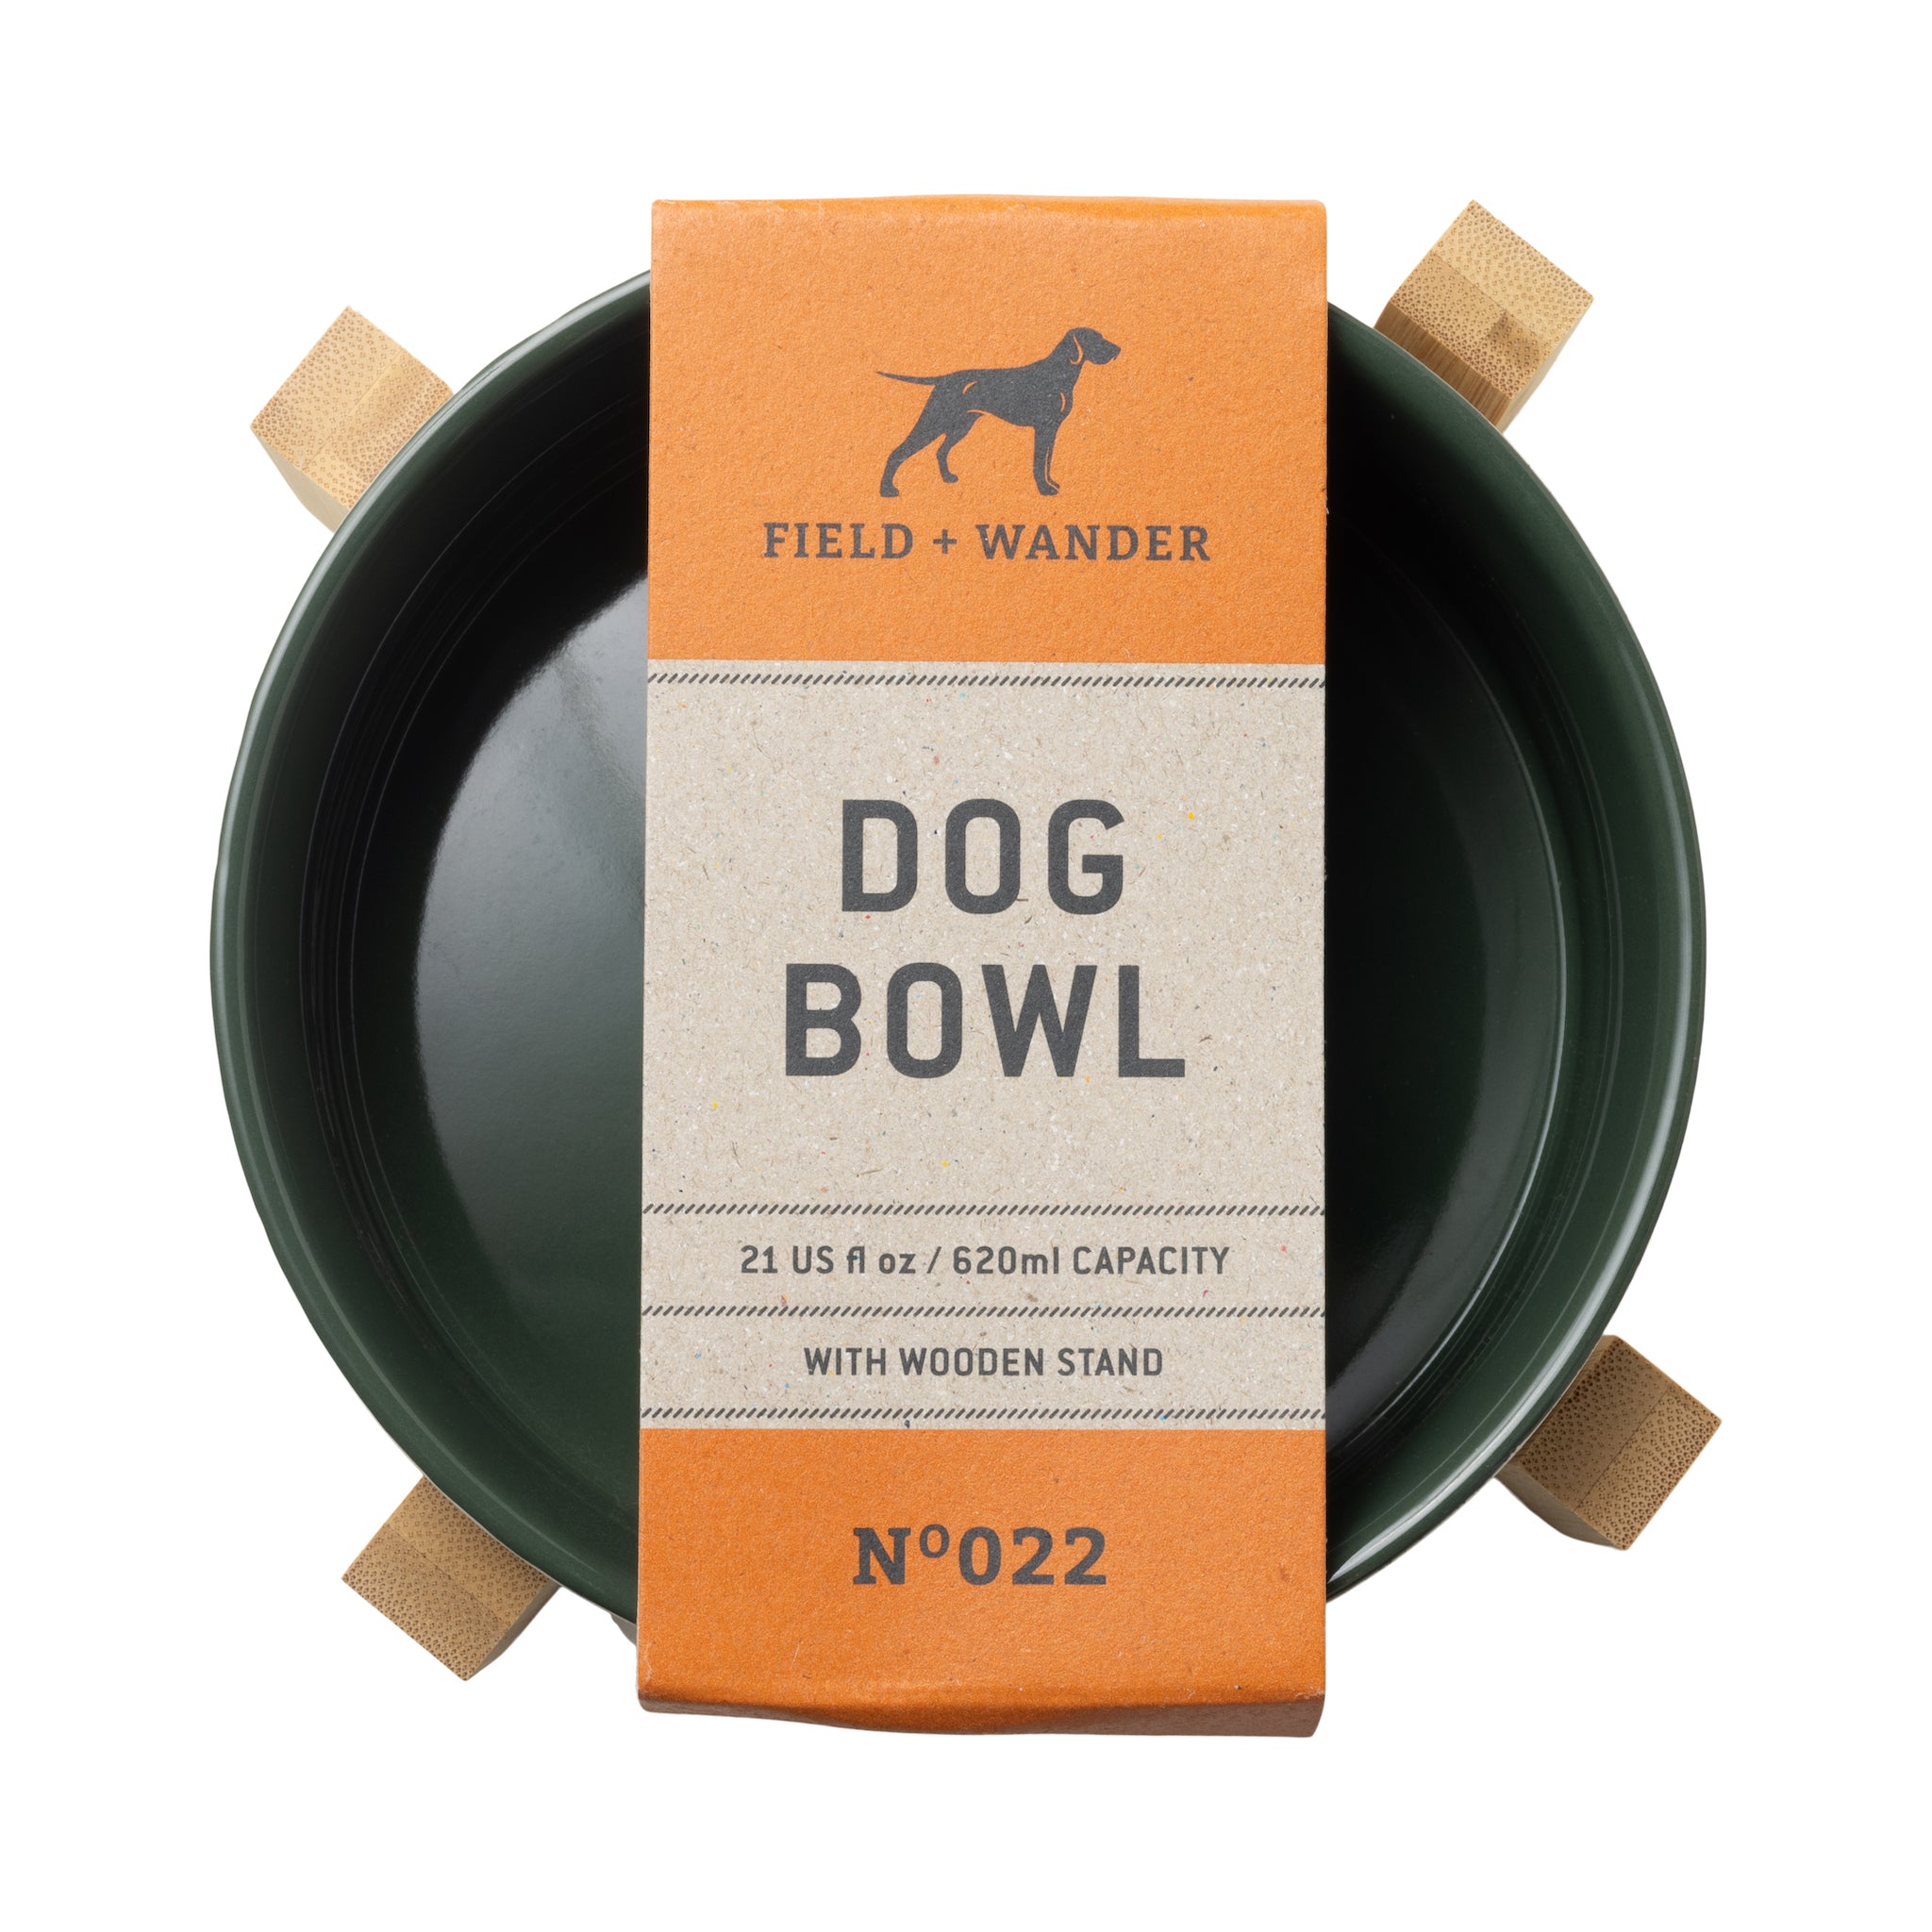 Ergonomic Ceramic Pet Bowl – Wishbone